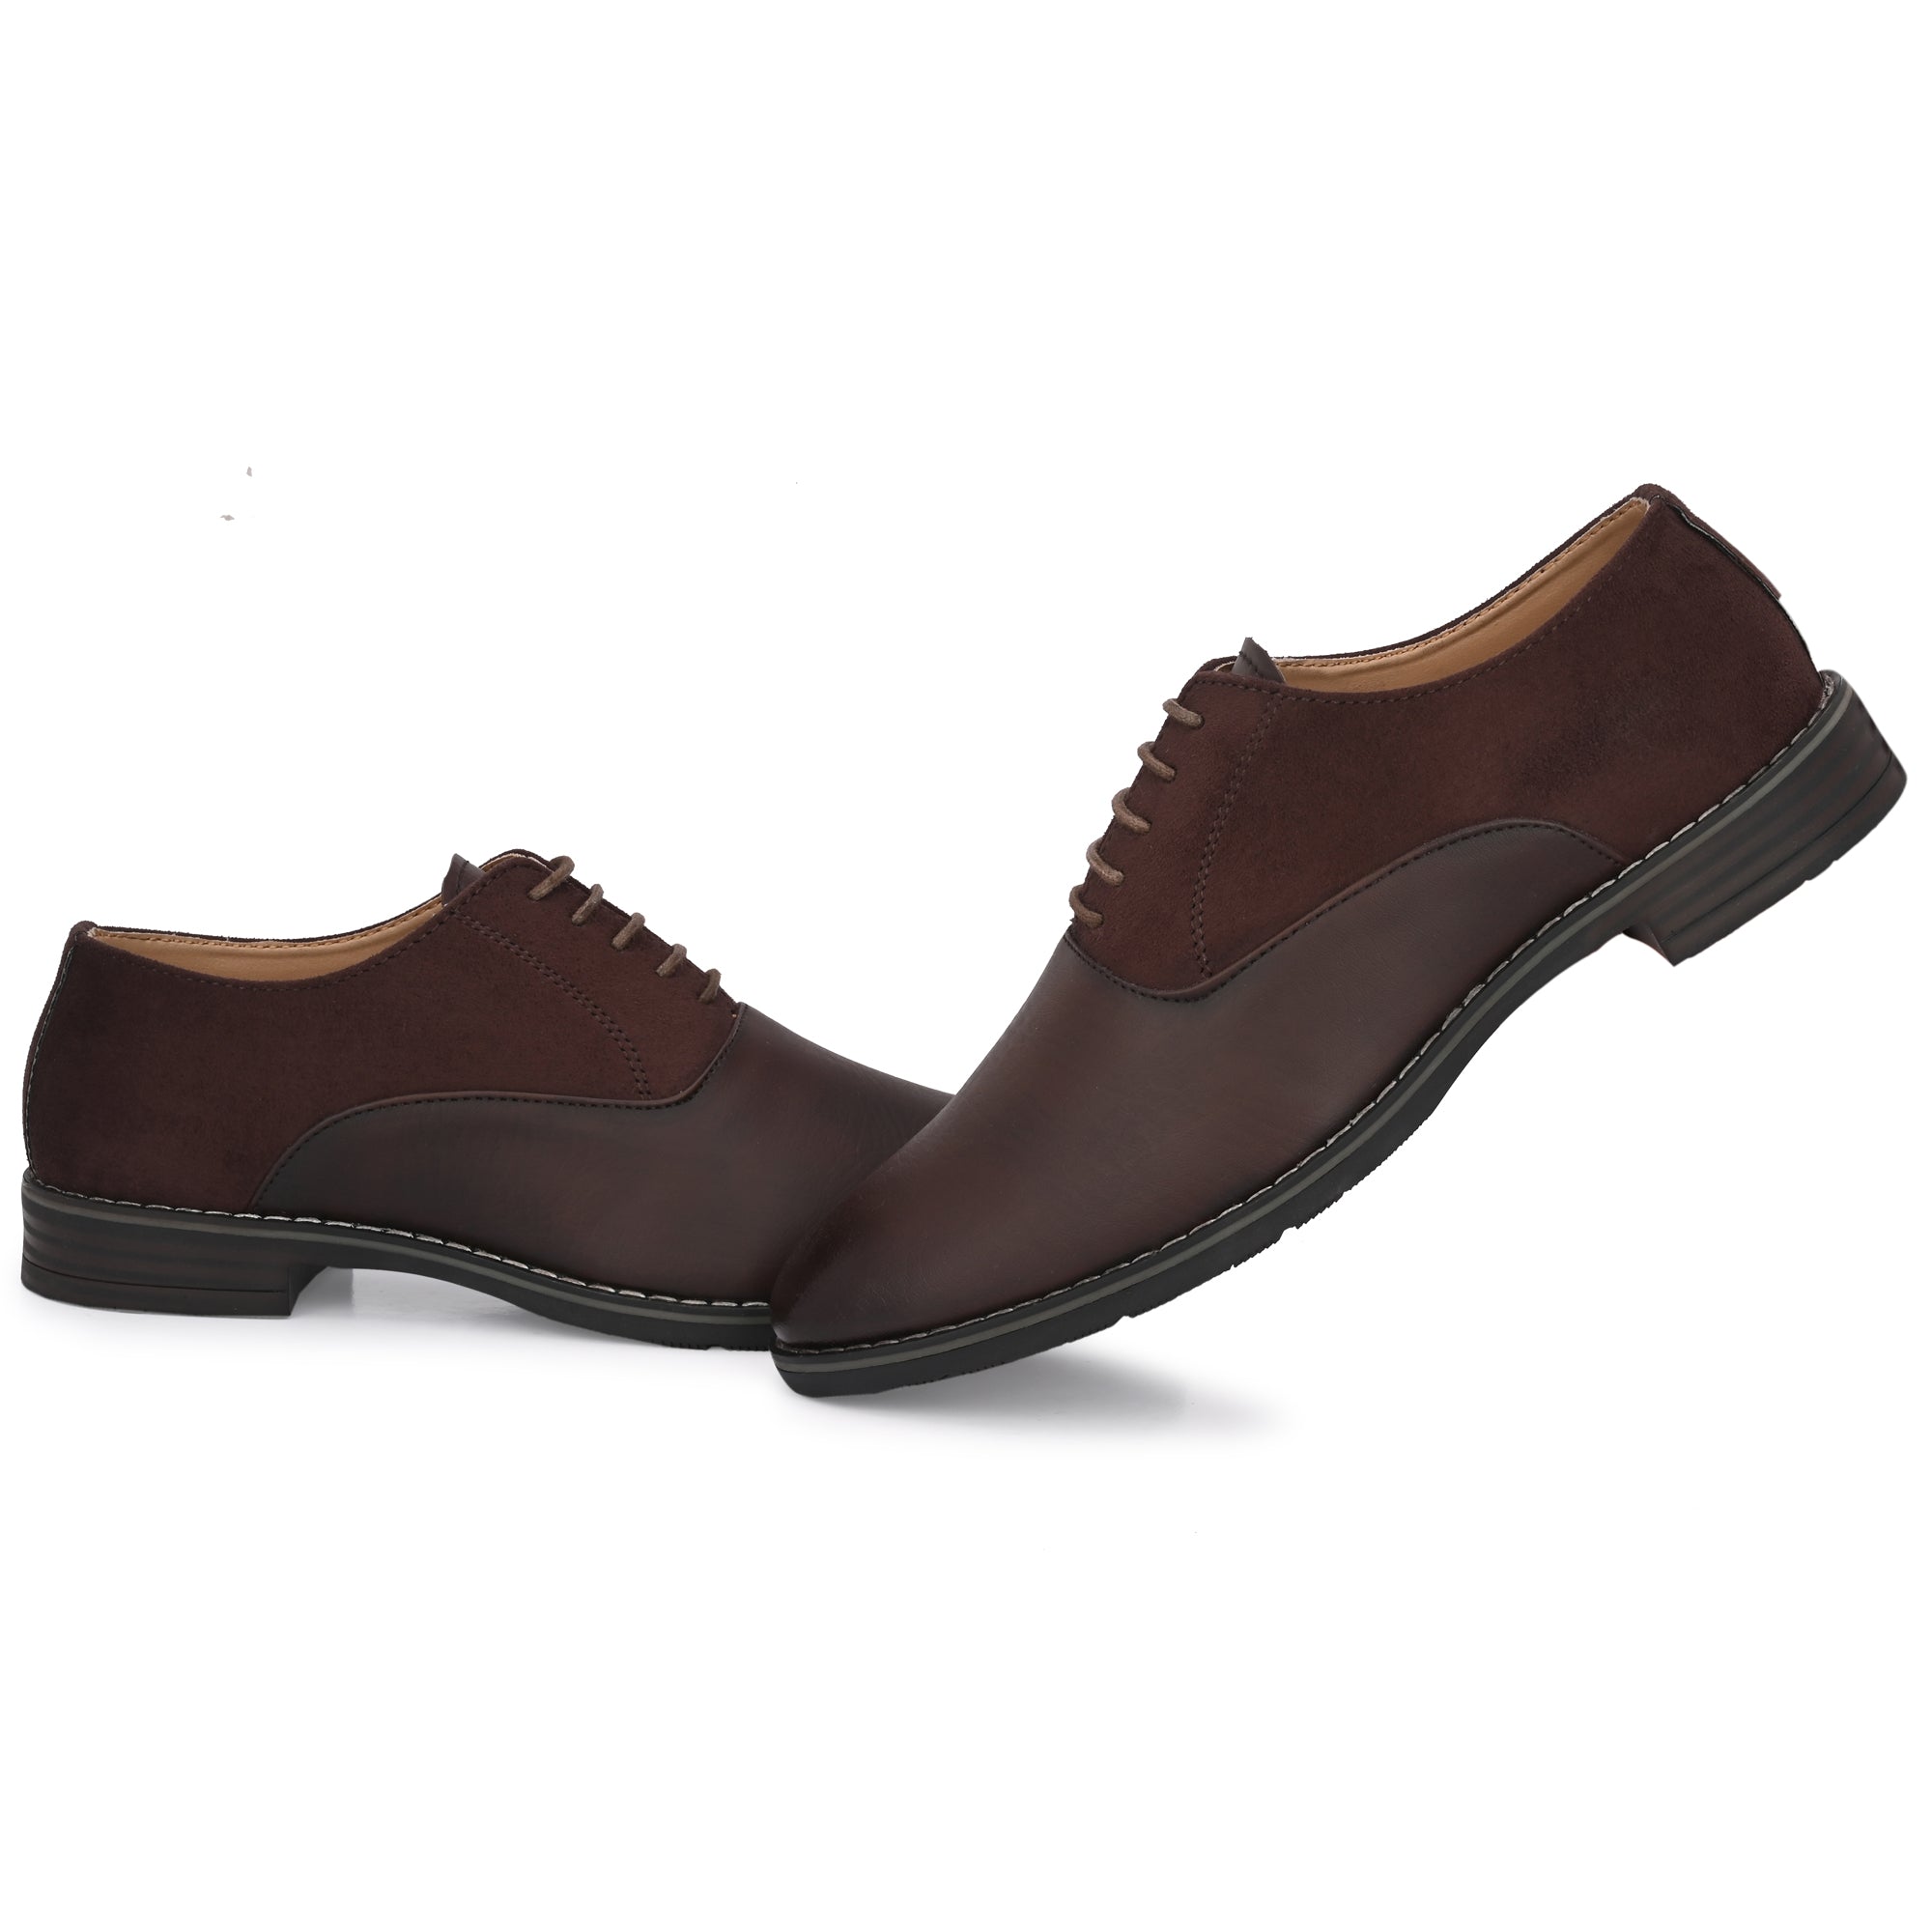 stylish-men-shoes-3751brown